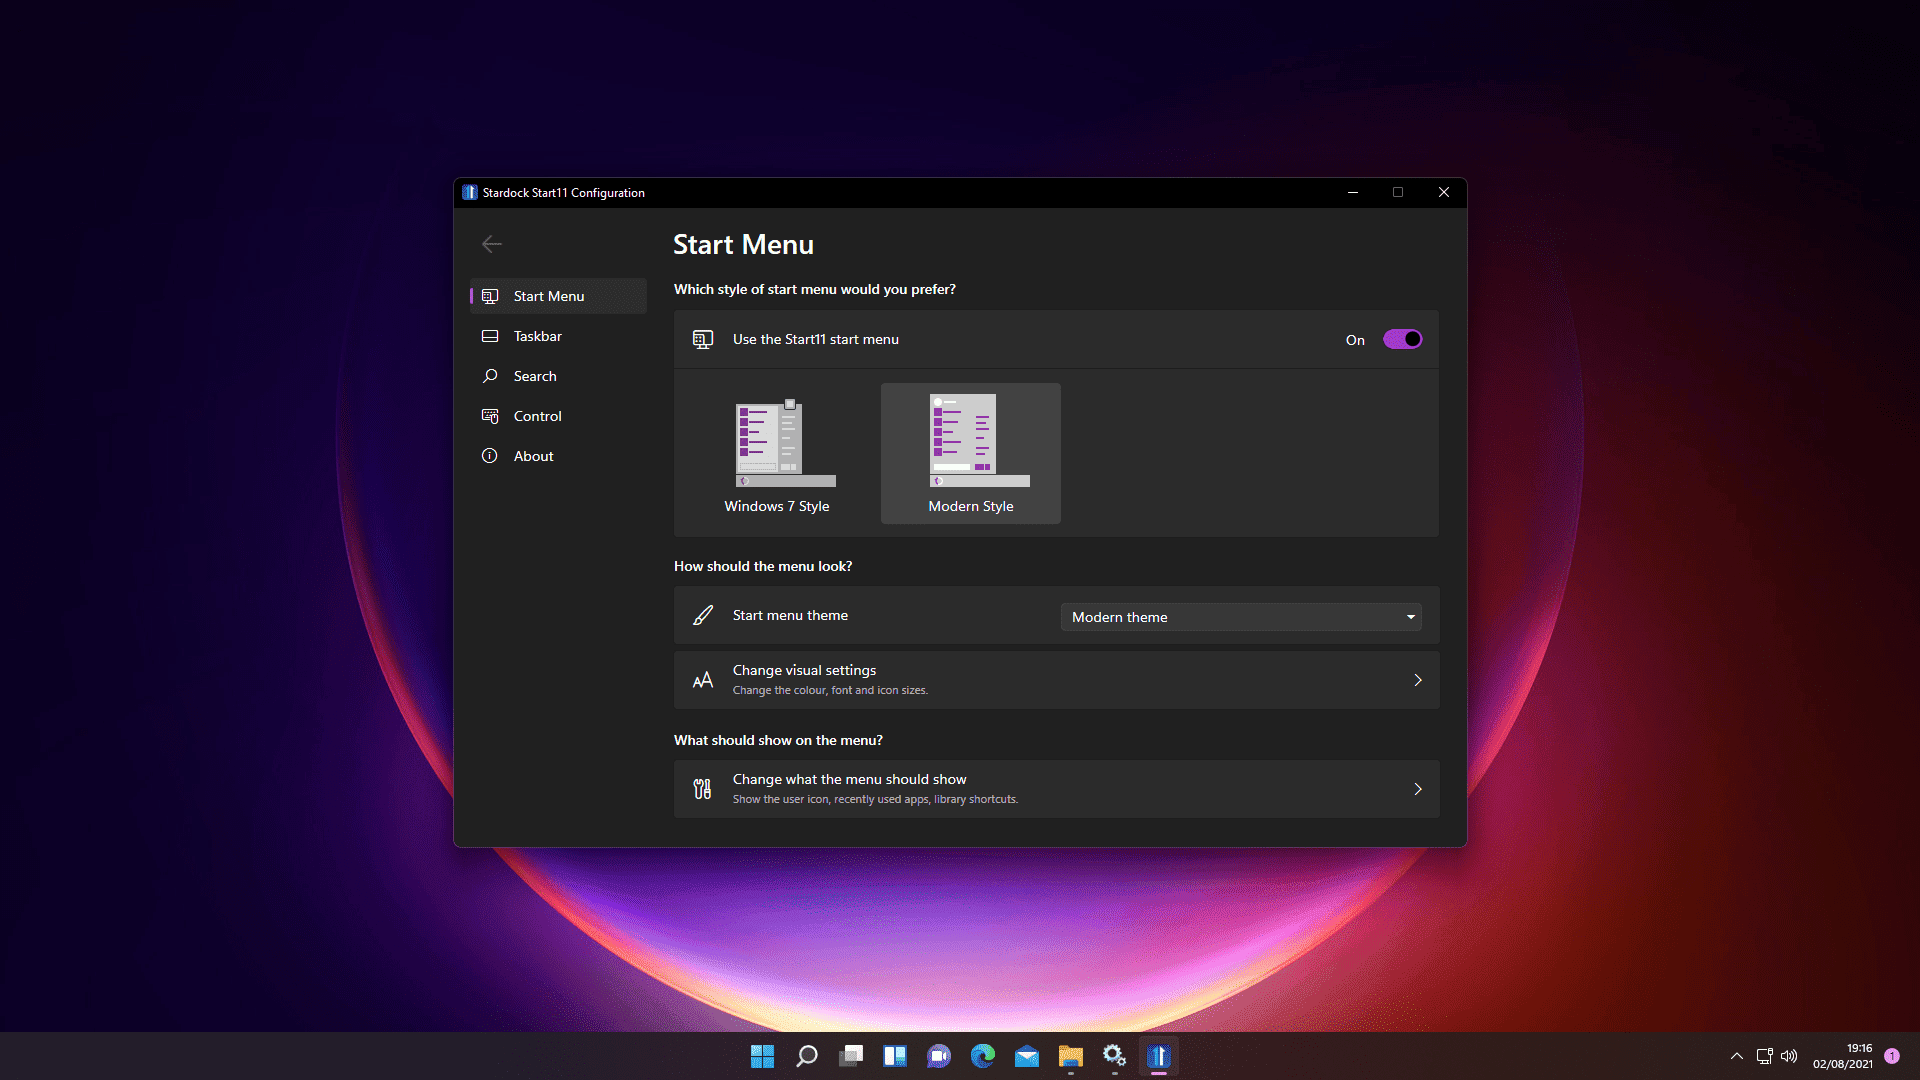 windows 8 start menu back